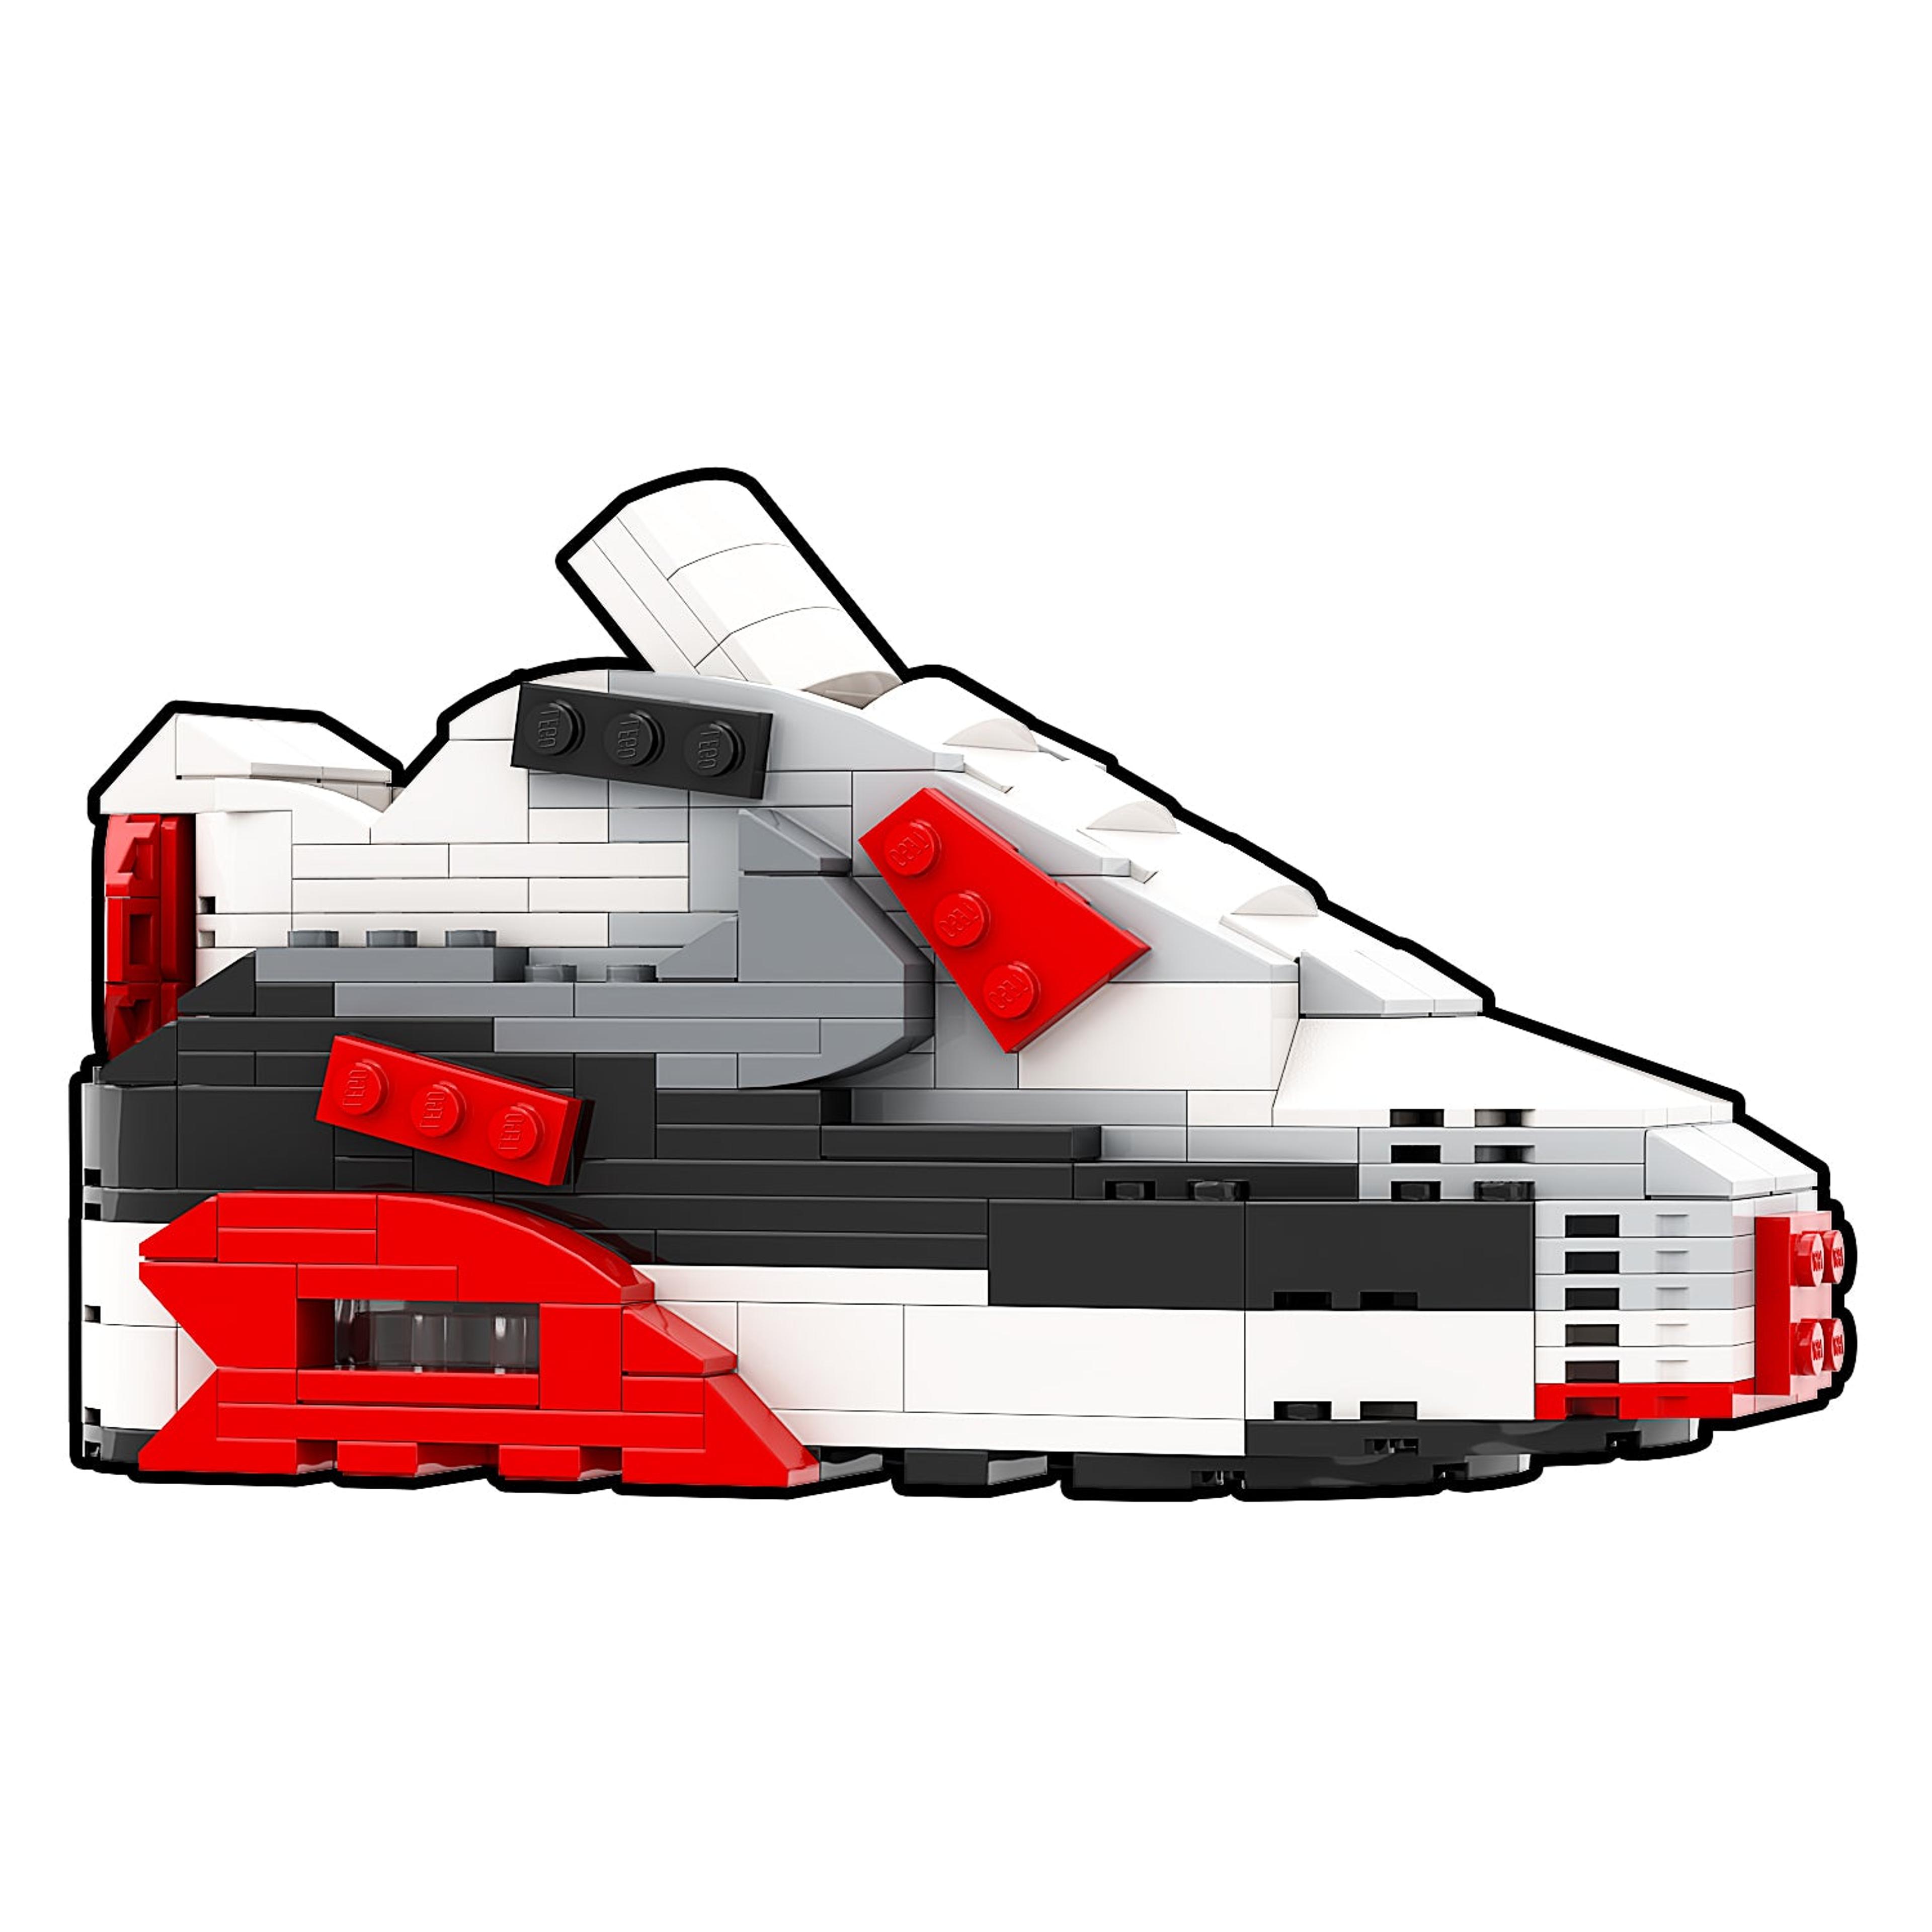 Alternate View 5 of REGULAR "Air Max 90 Infrared" Sneaker Bricks with Mini Figure